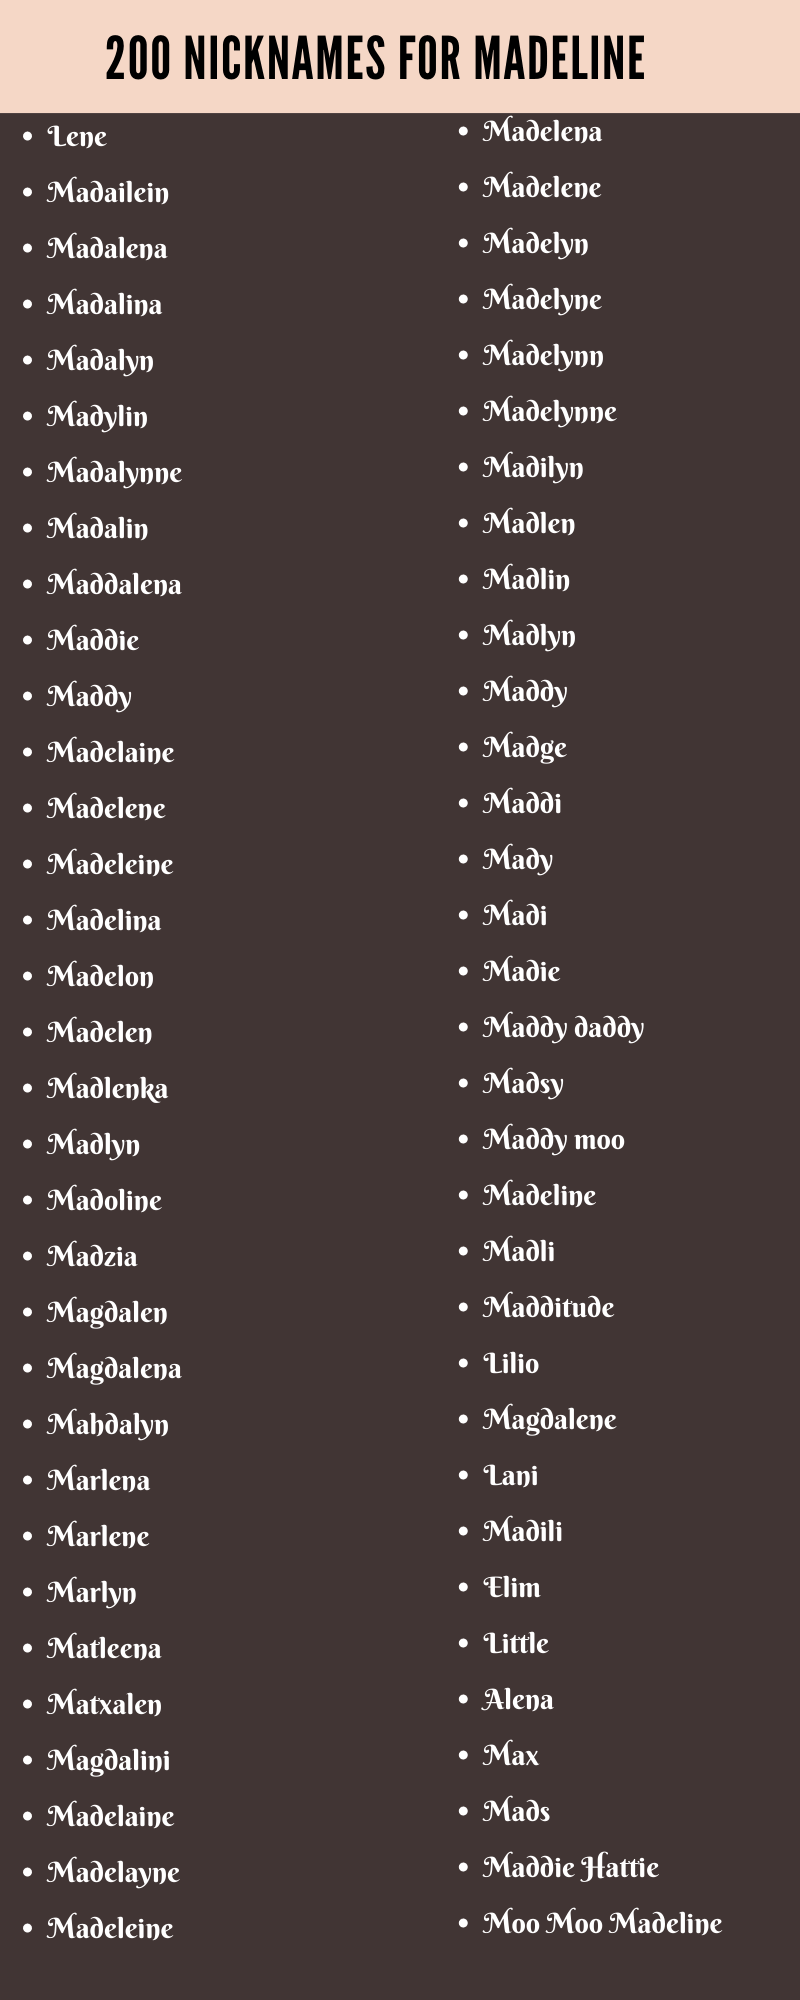 Madeline Nicknames